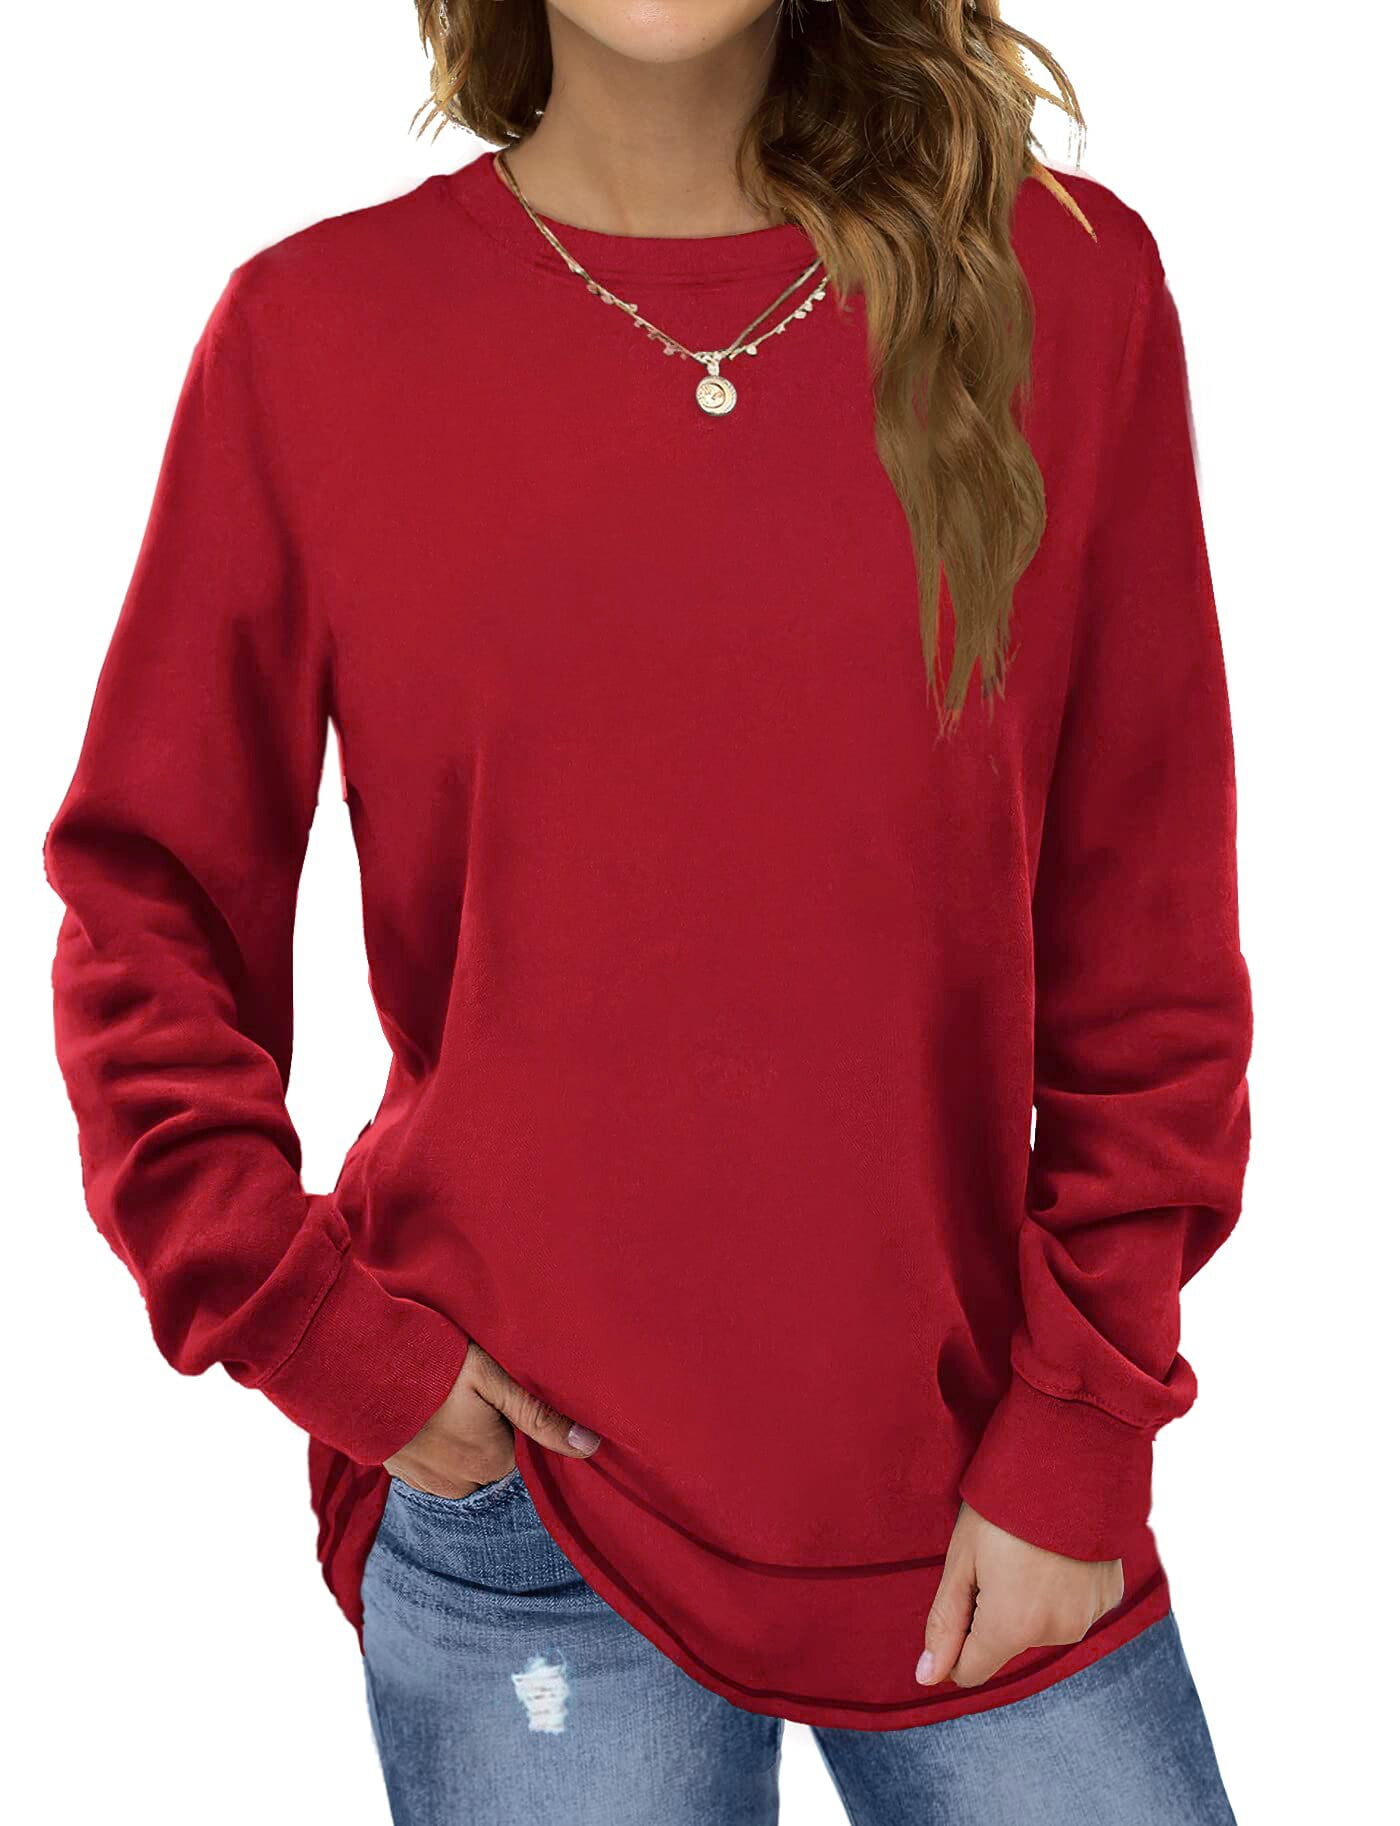 Fantaslook Sweatshirts for Women Crewneck Casual Long Sleeve